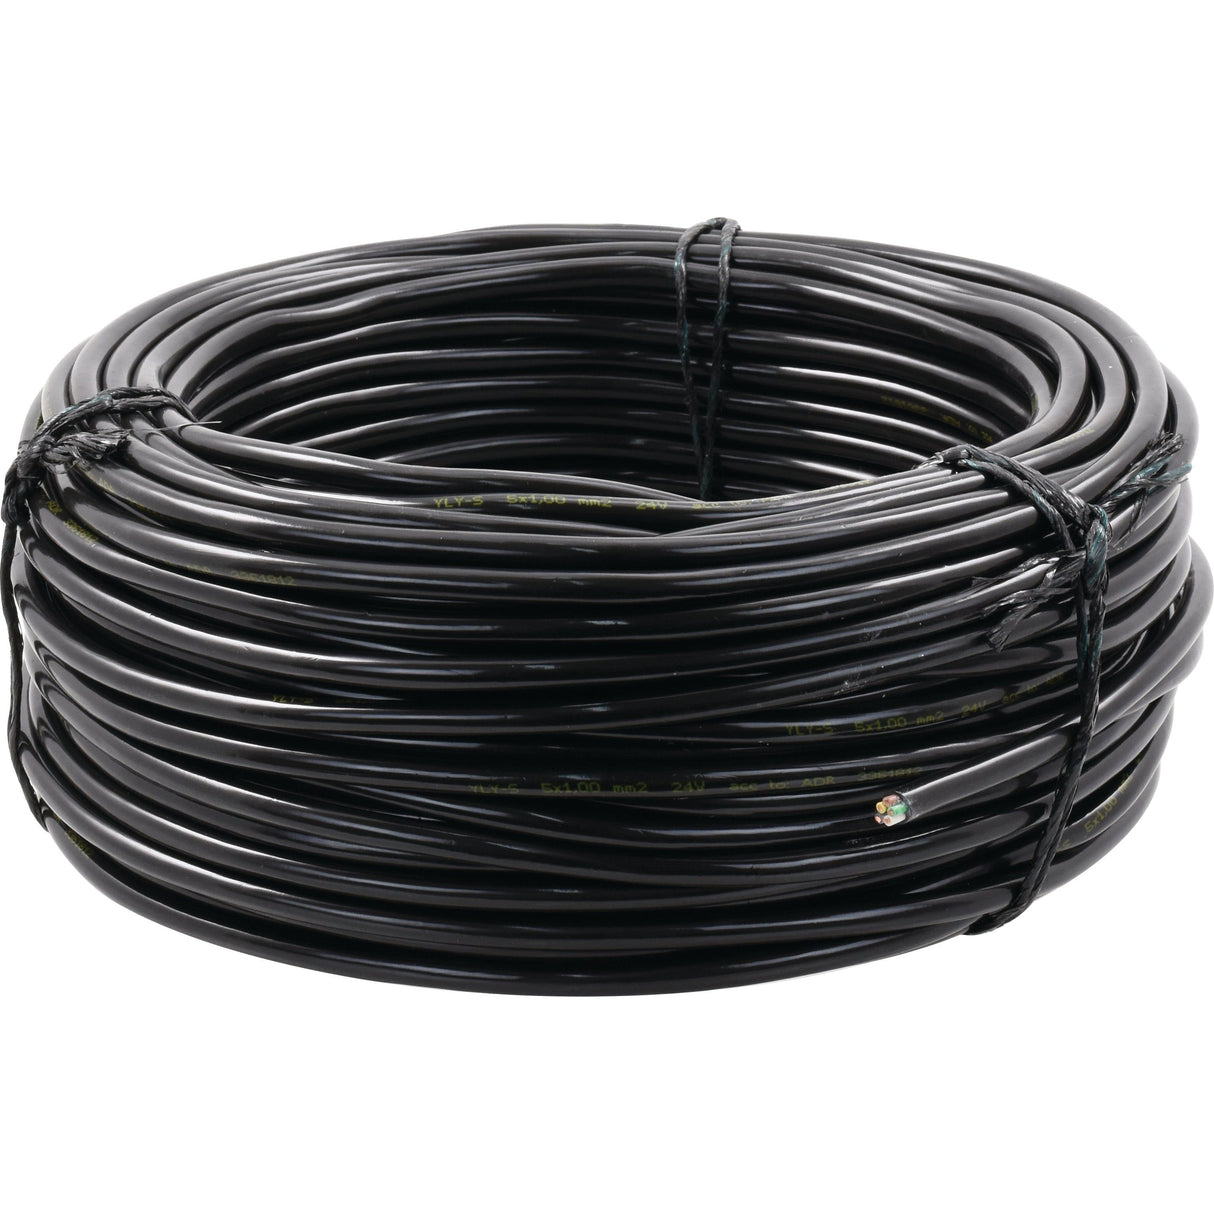 Electrical Cable - 5 Core, 1mm² Cable, Black (Length: 50M), ()
 - S.139732 - Farming Parts